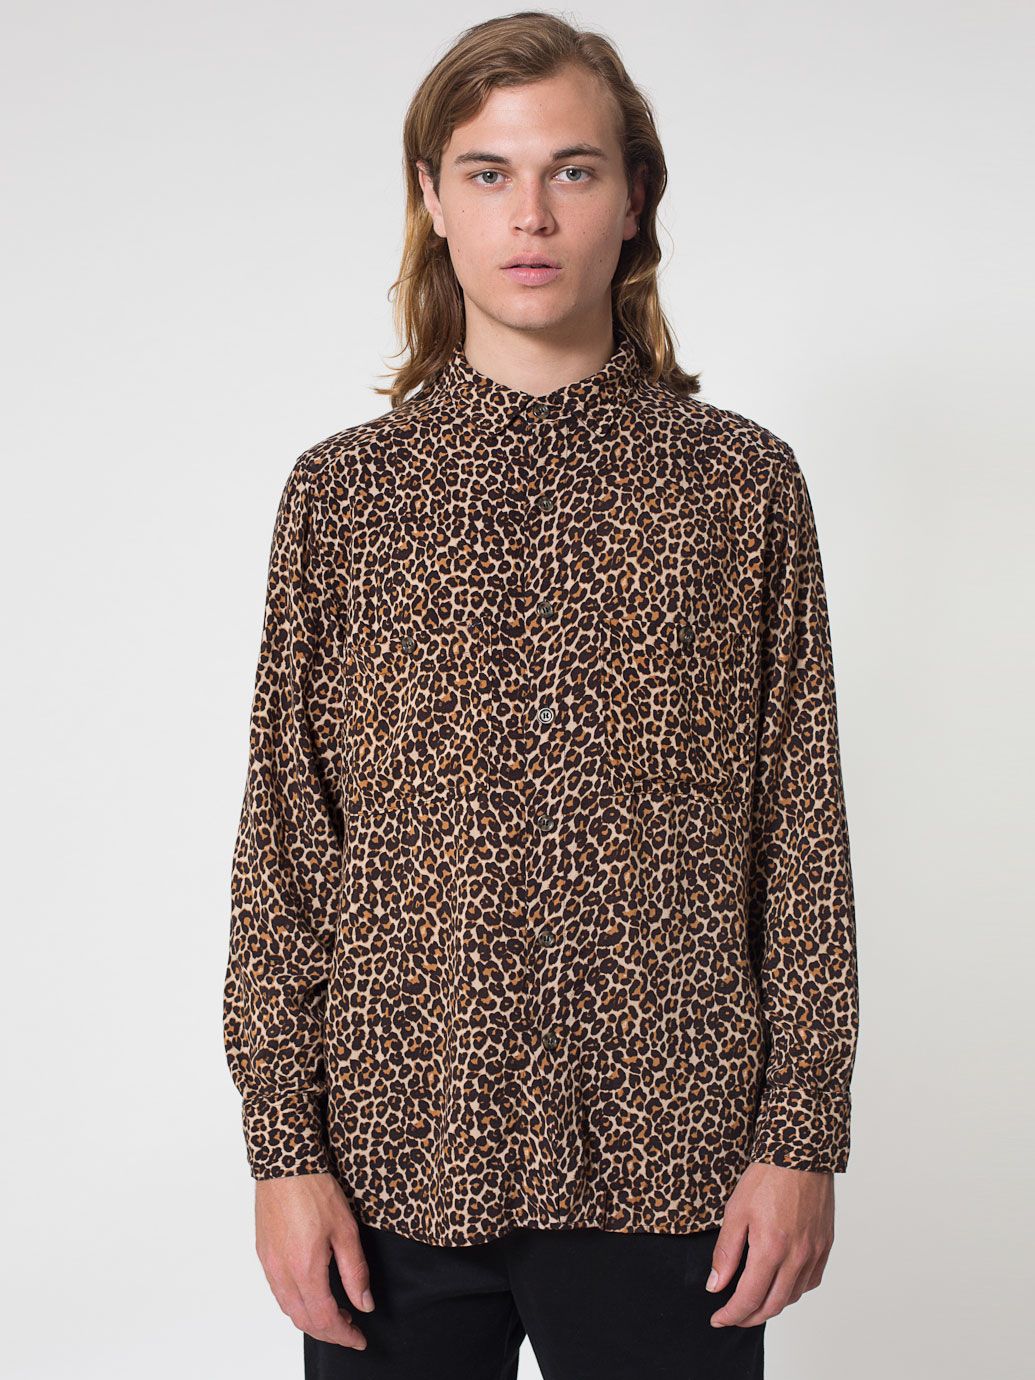 American Apparel Leopard Print Shirt 001